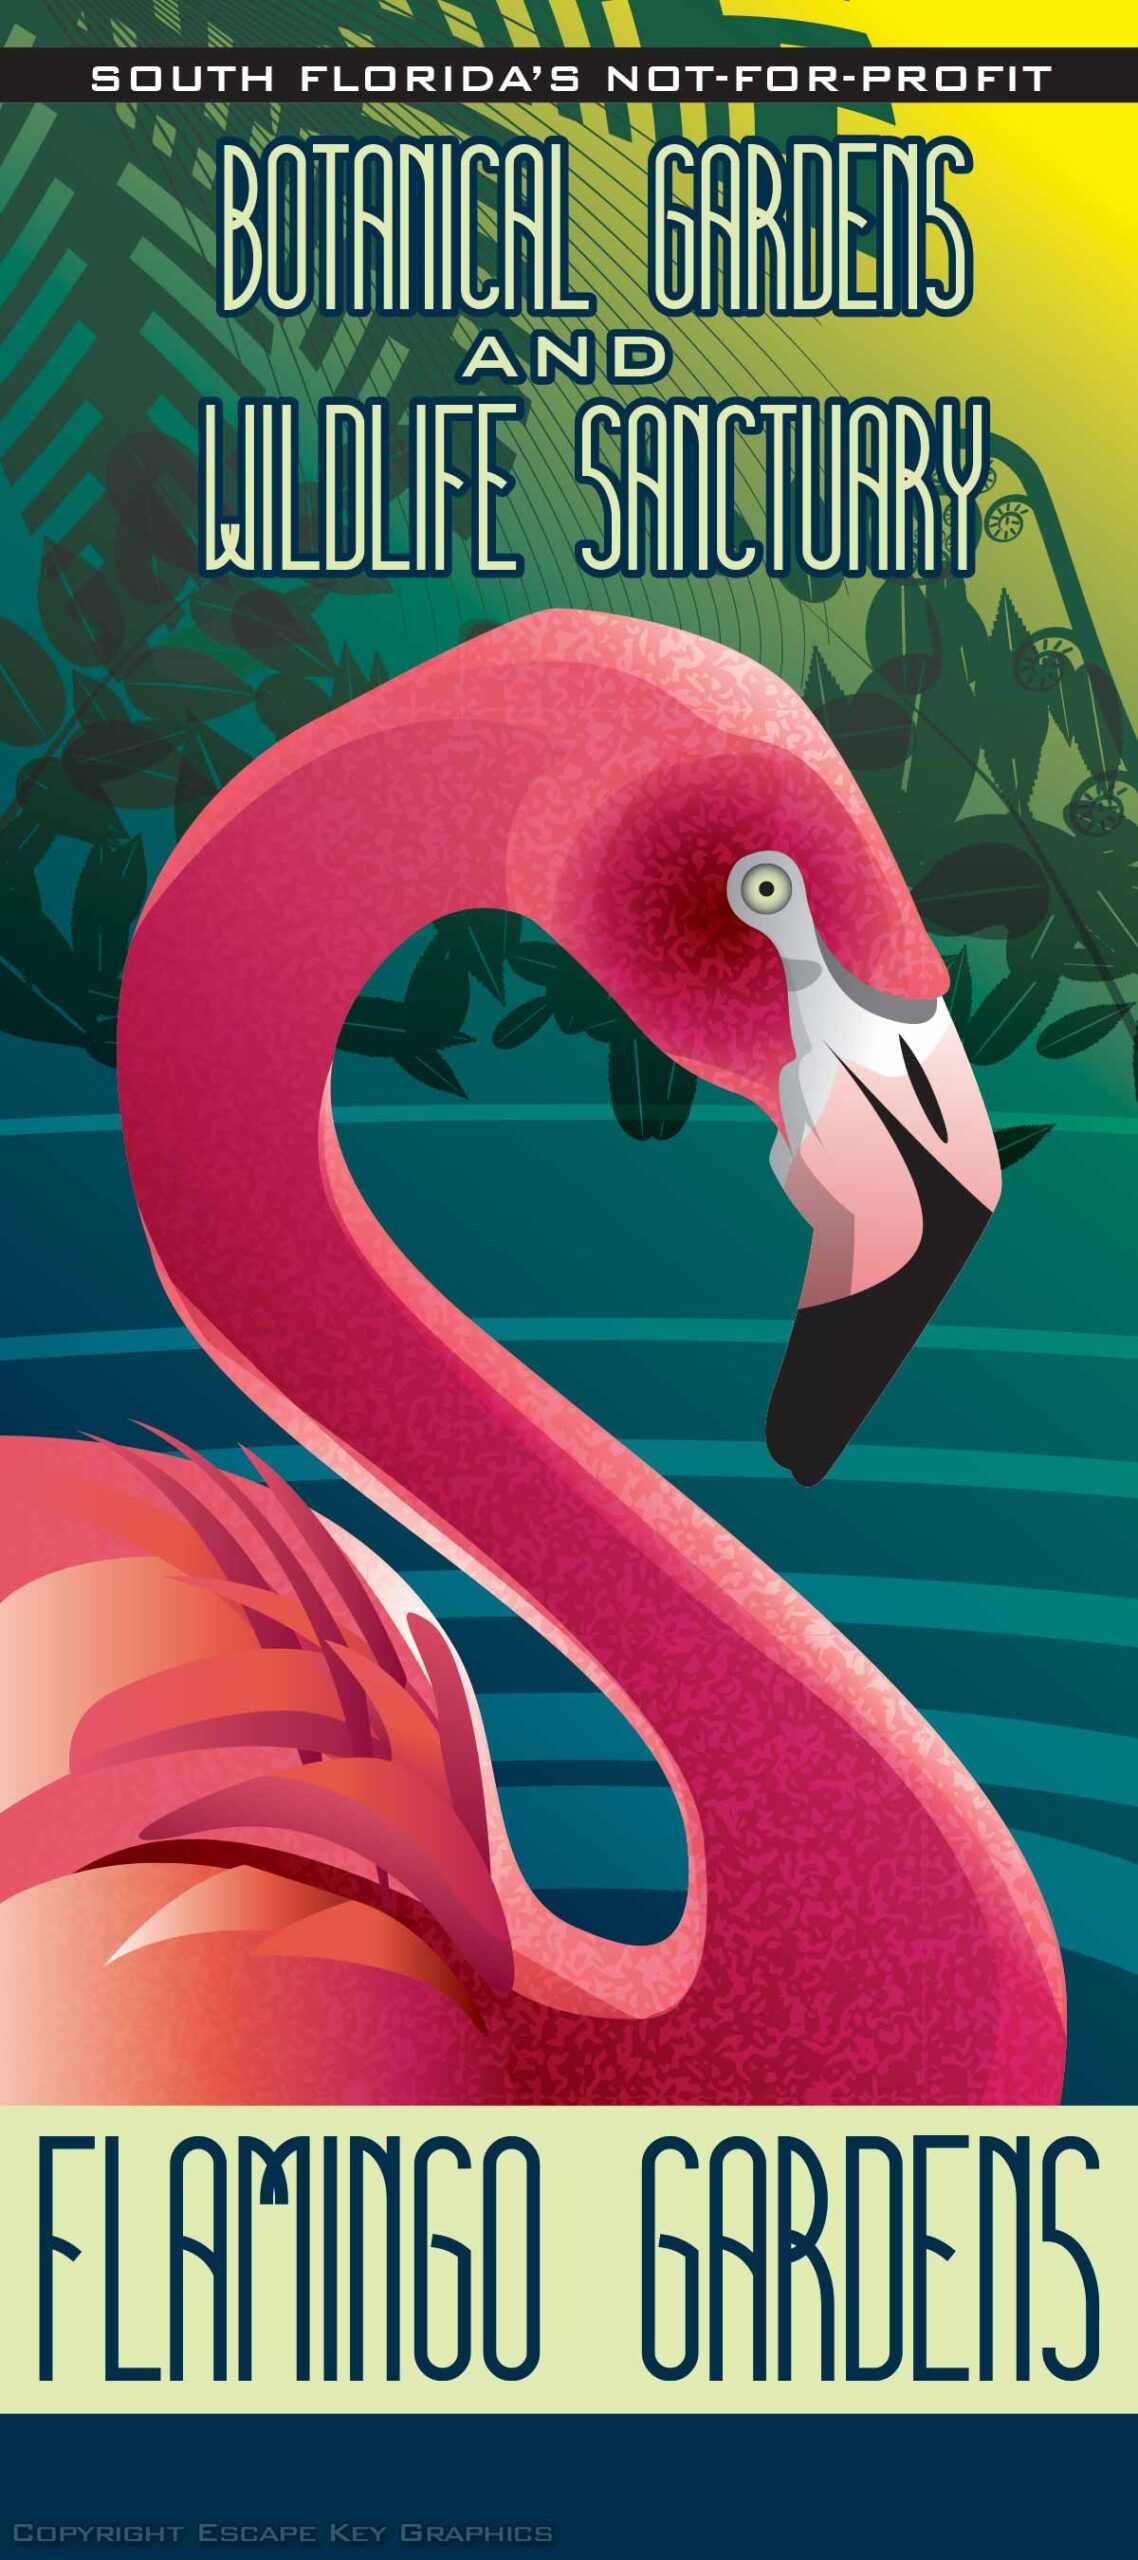 Flamingo Gardens Brochure Cover Illustration